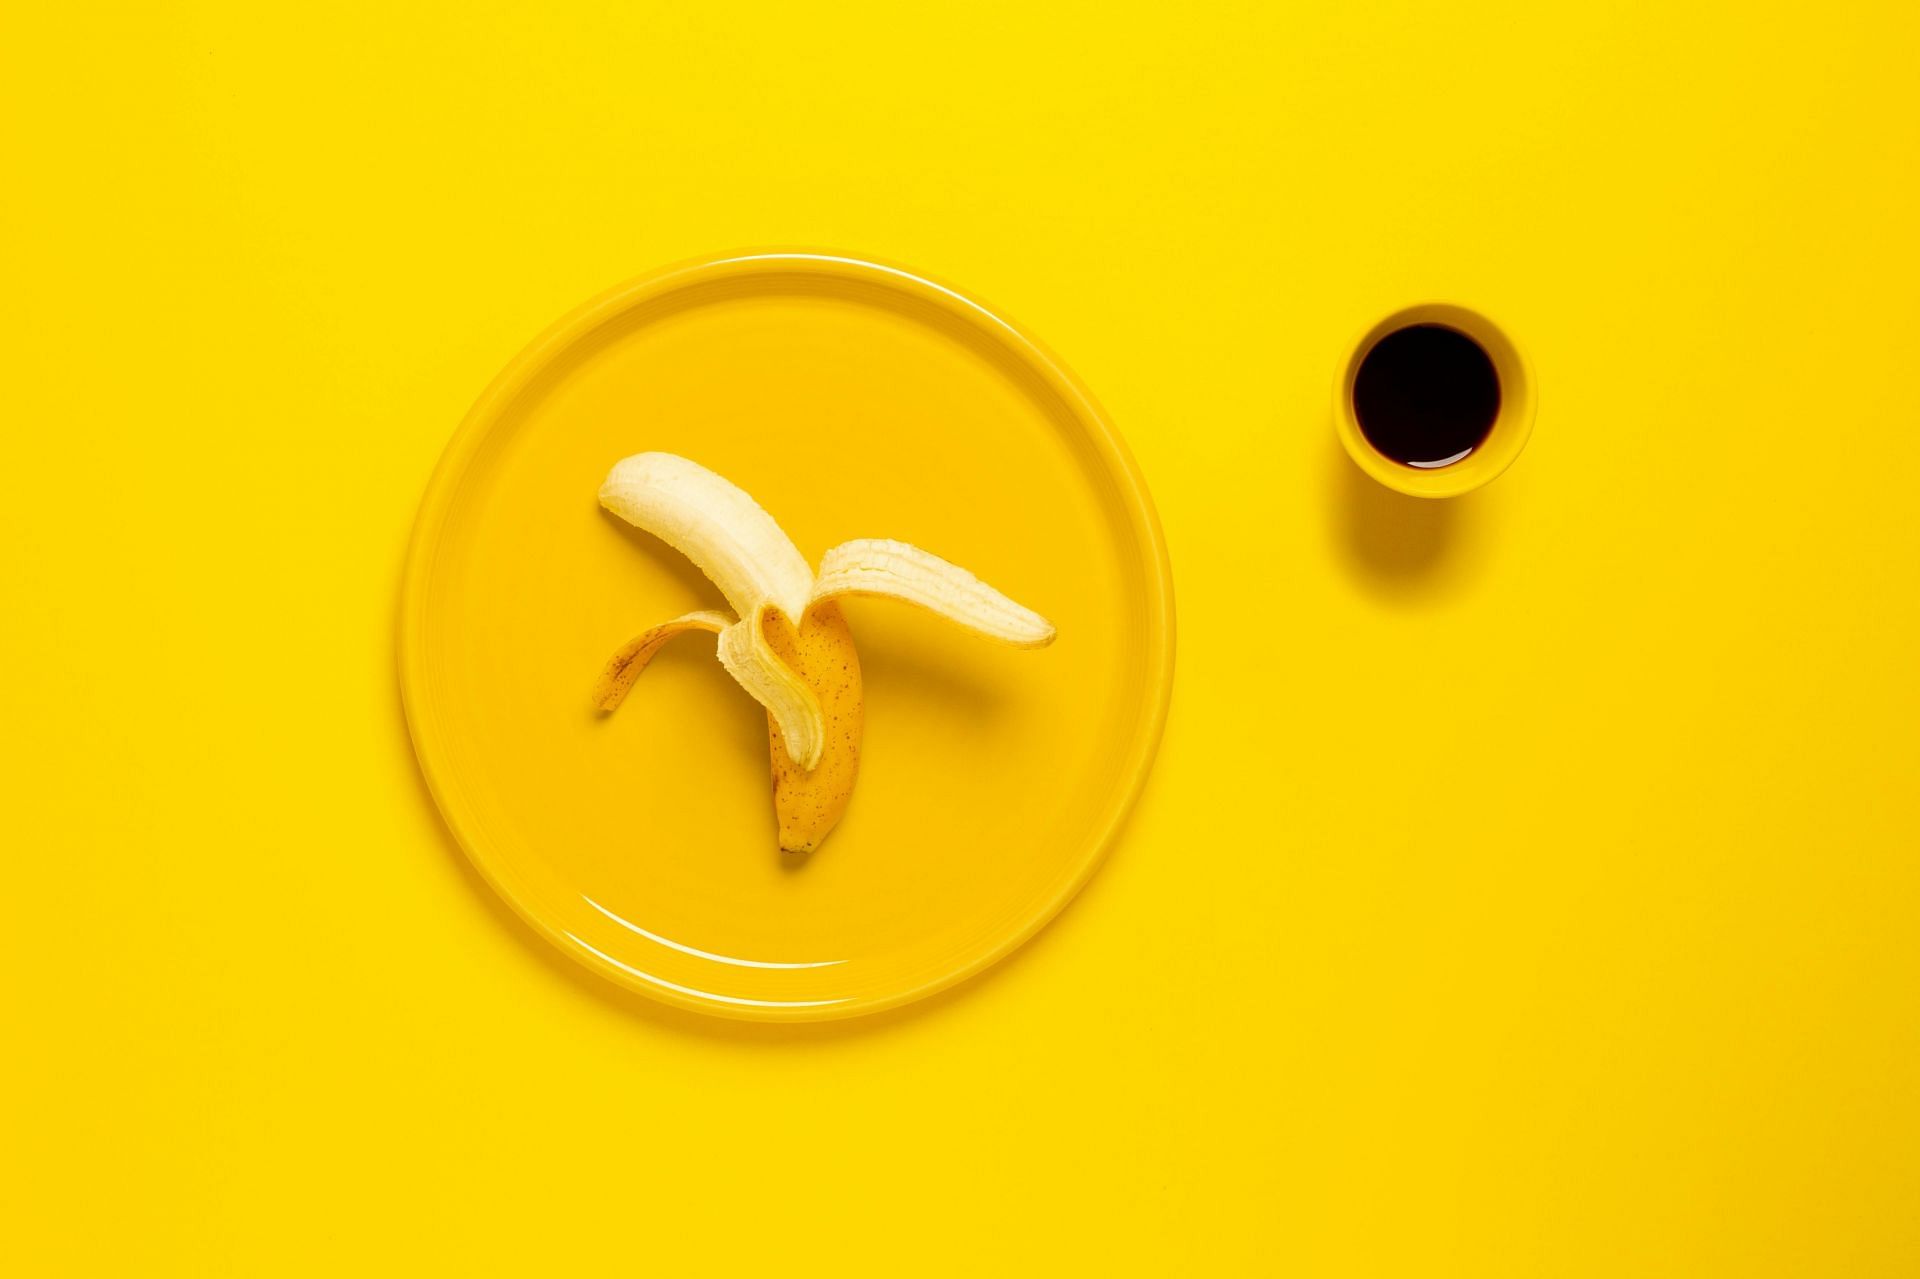 Morning banana diet (image sourced via Pexels / Photo by aleksandar)